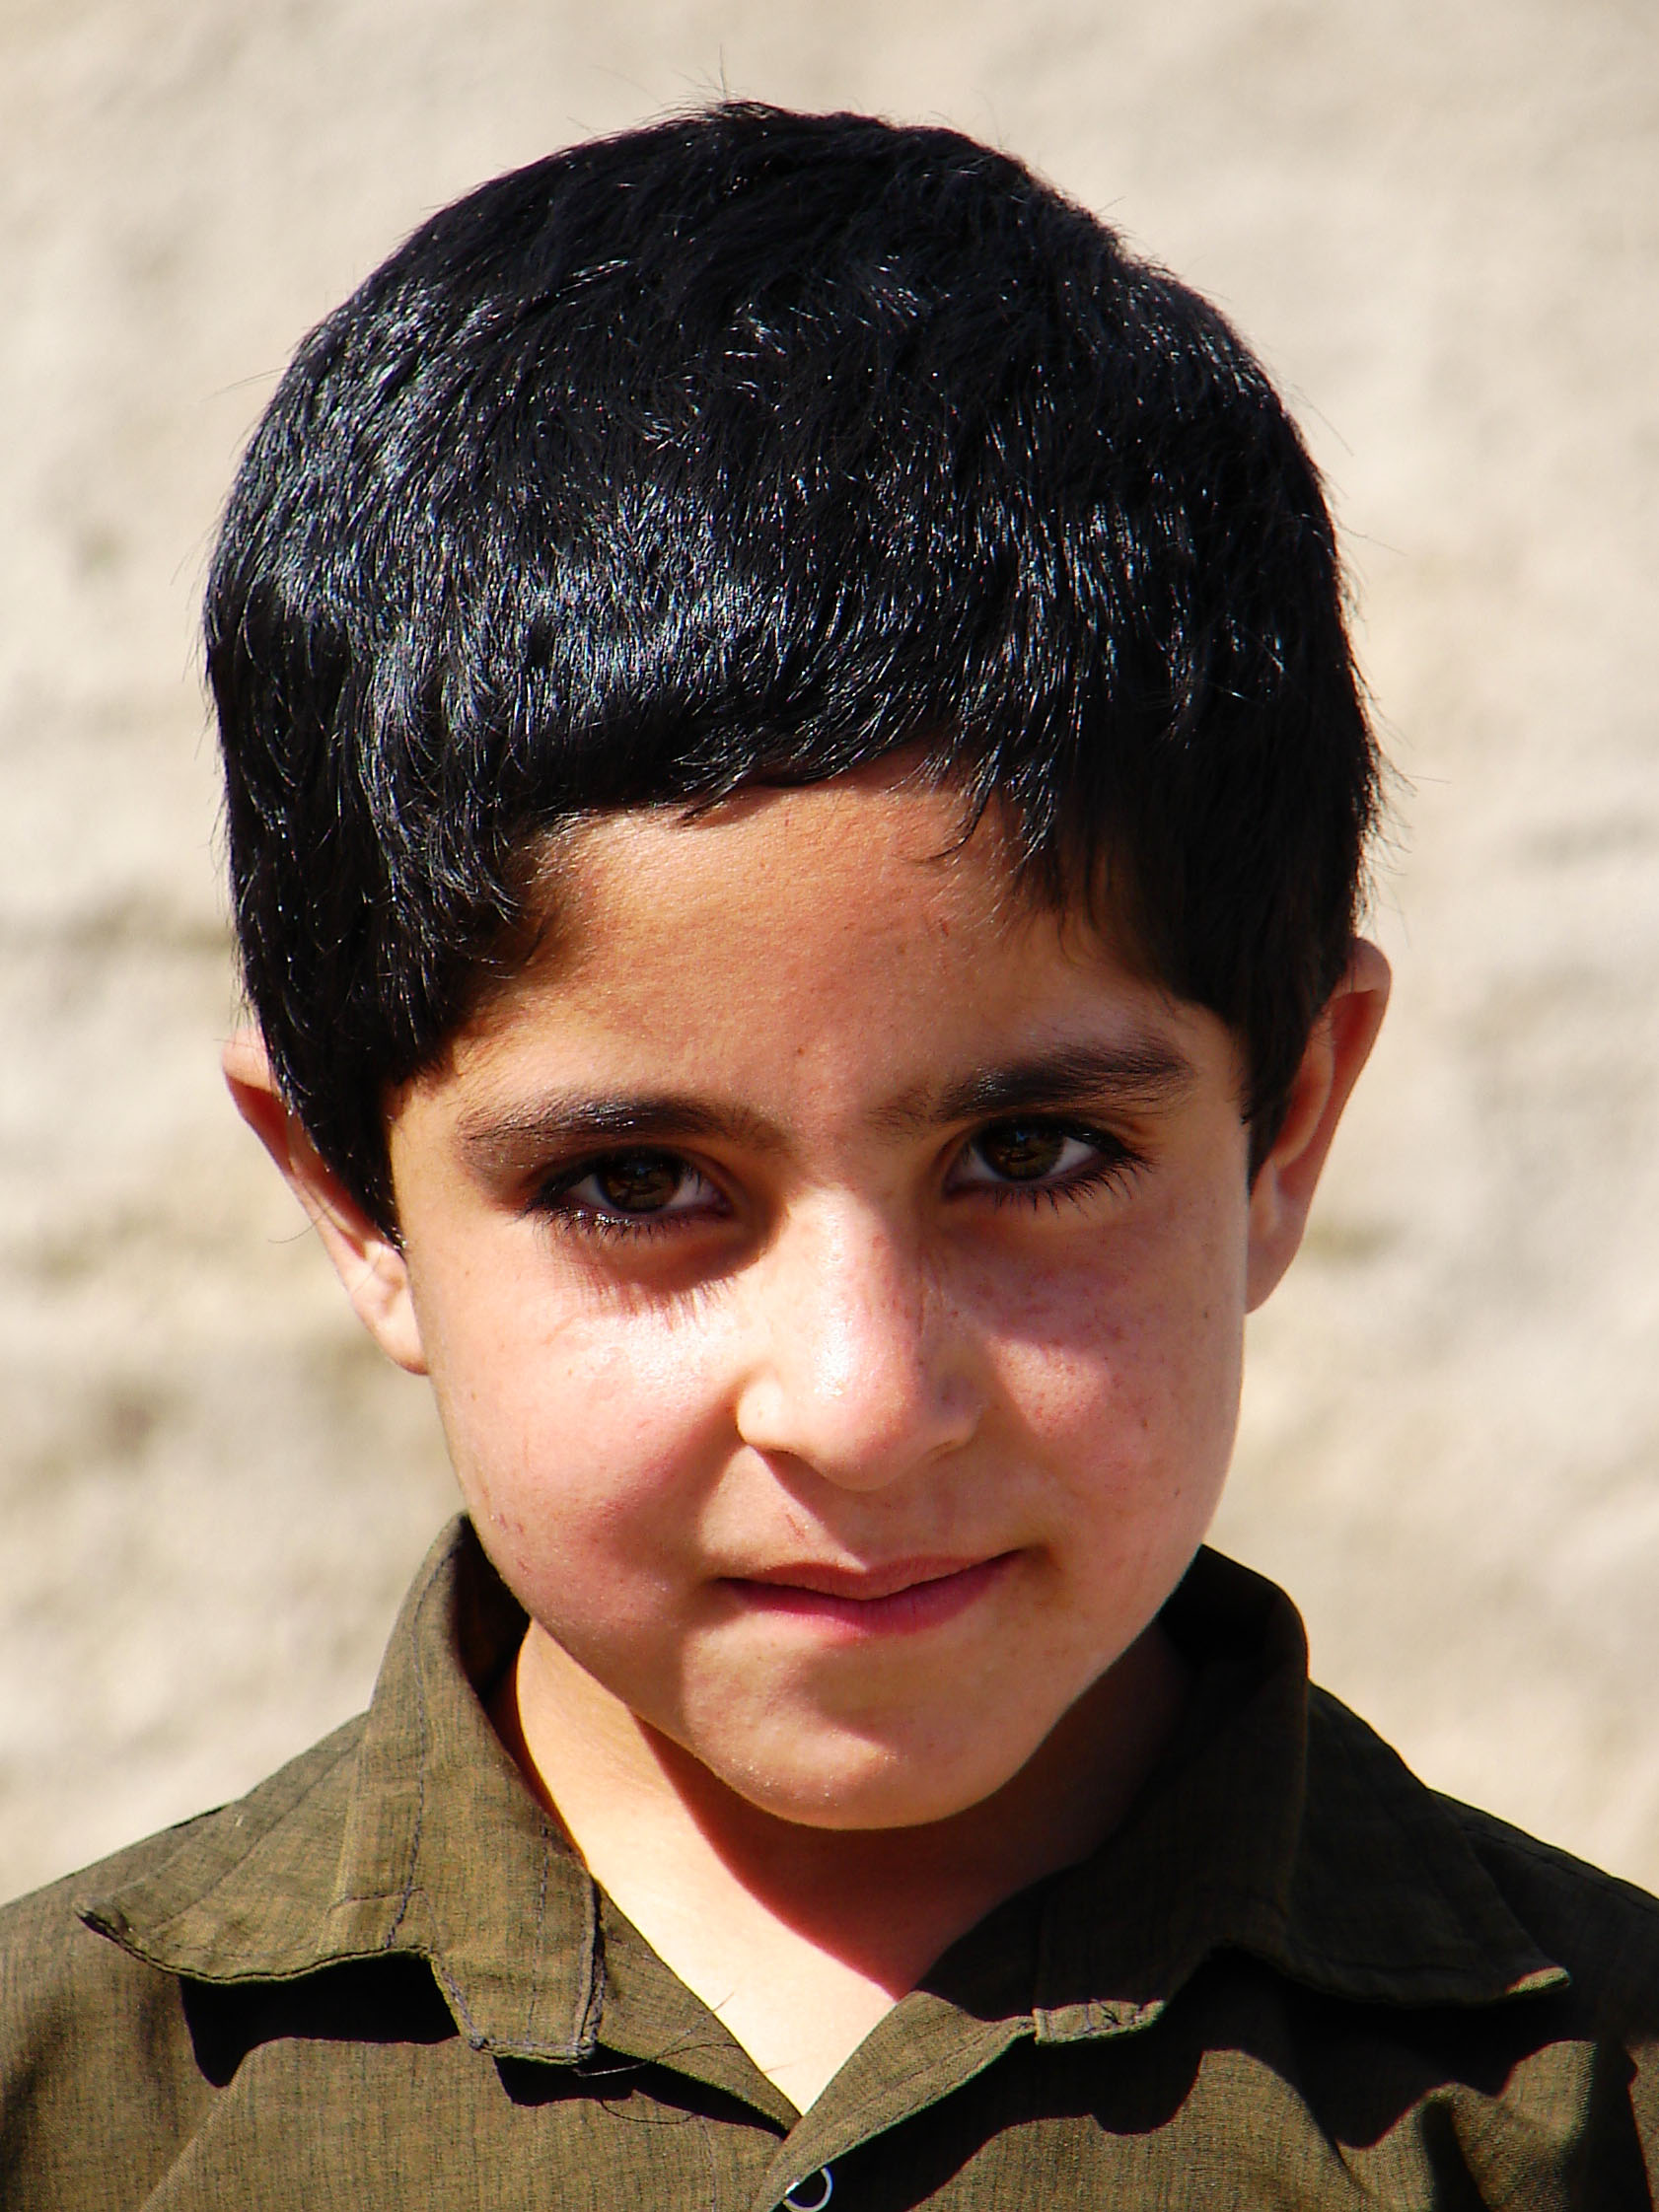 Persian-Iranian boy, Isfahan, Iran, 06-30-2006